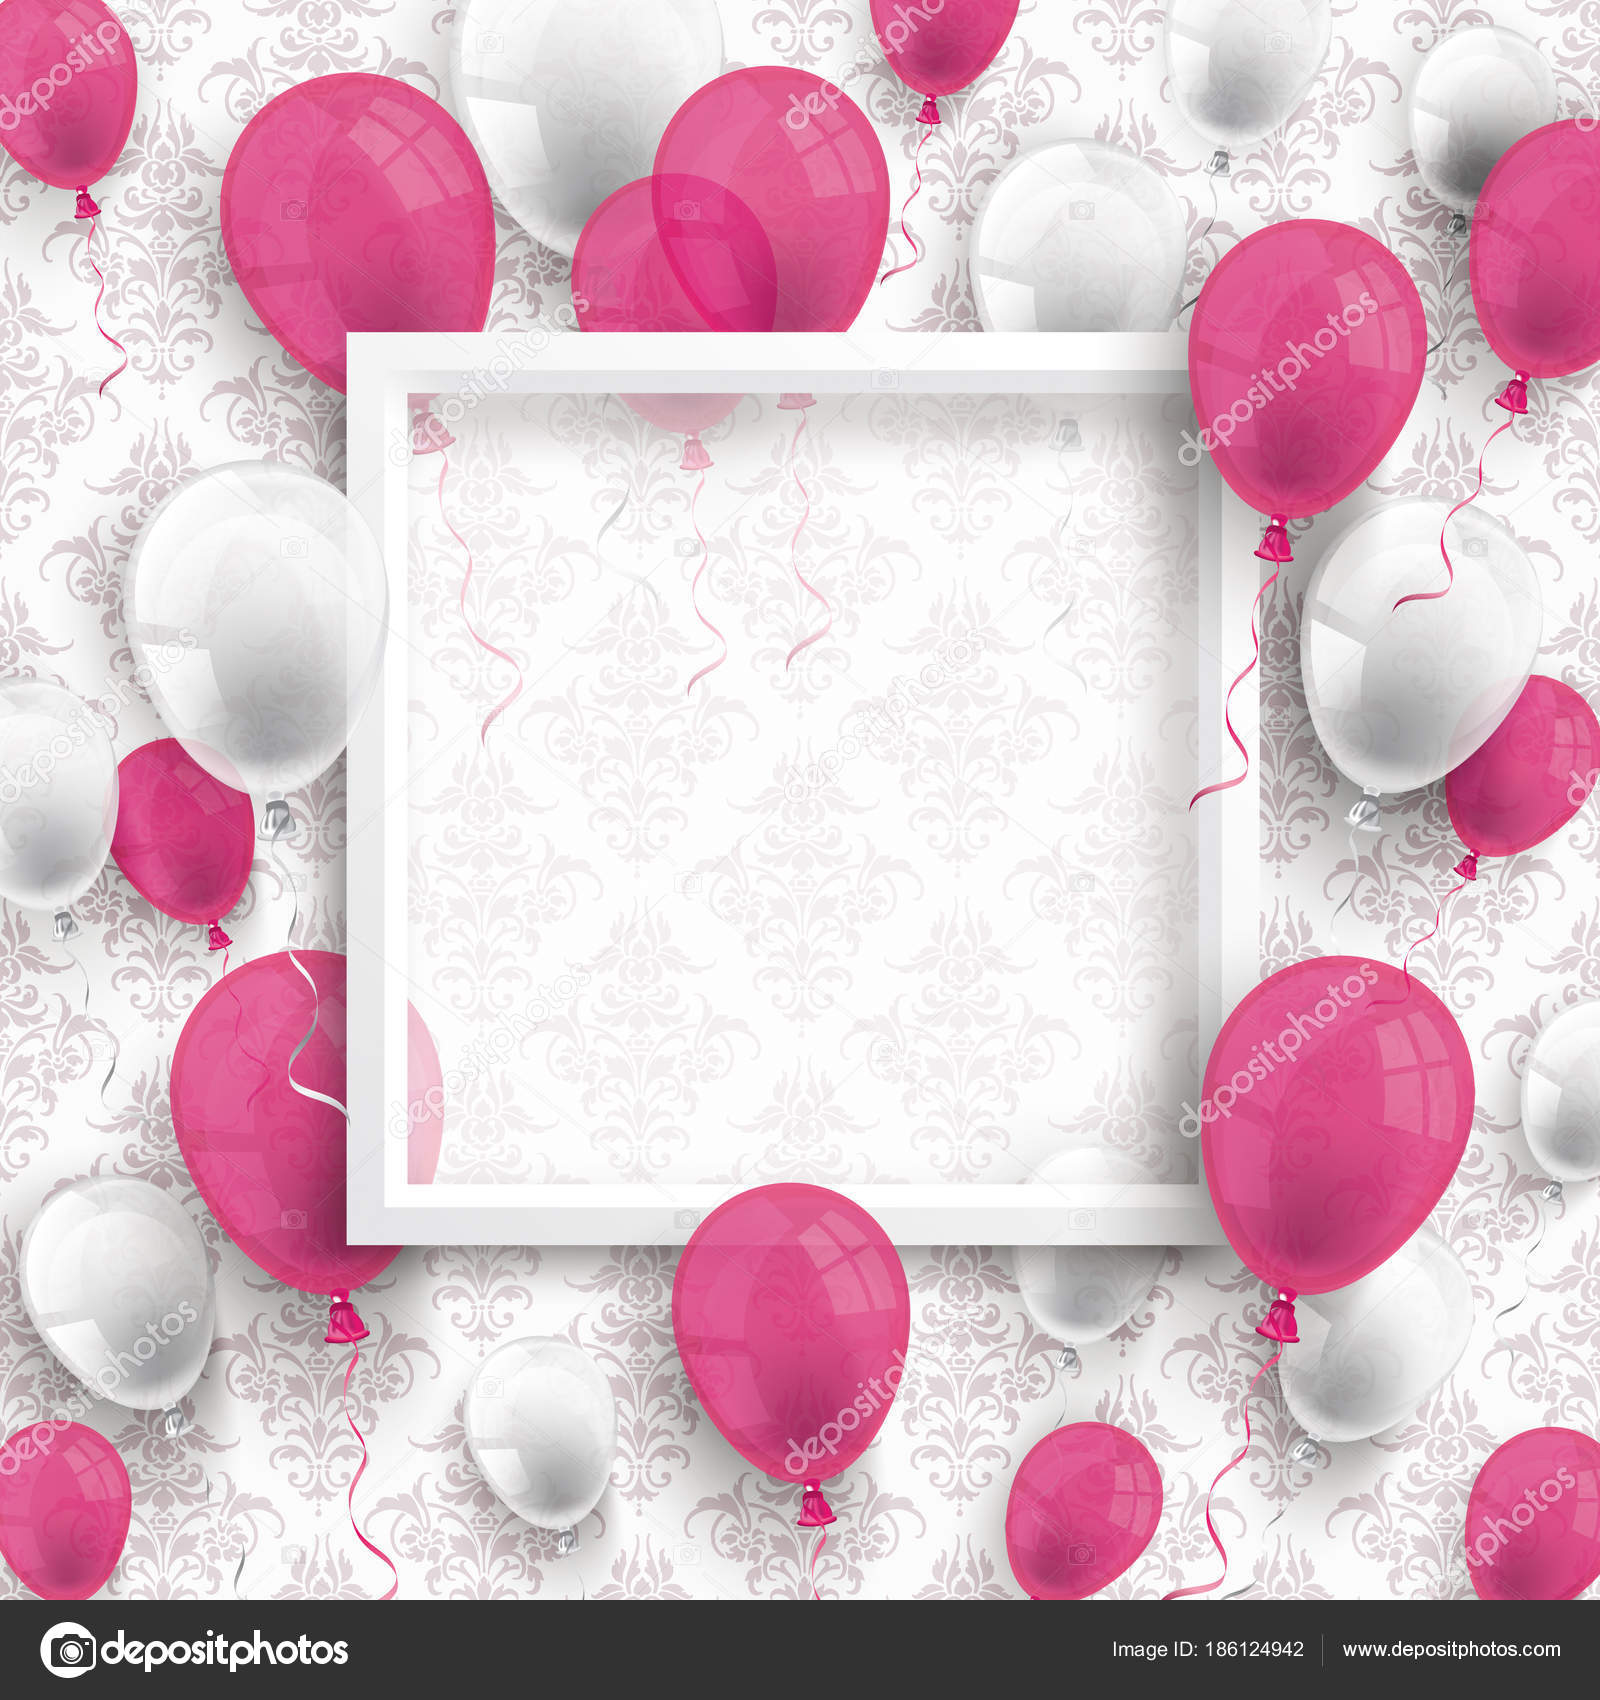 Pink Balloon Wallpapers